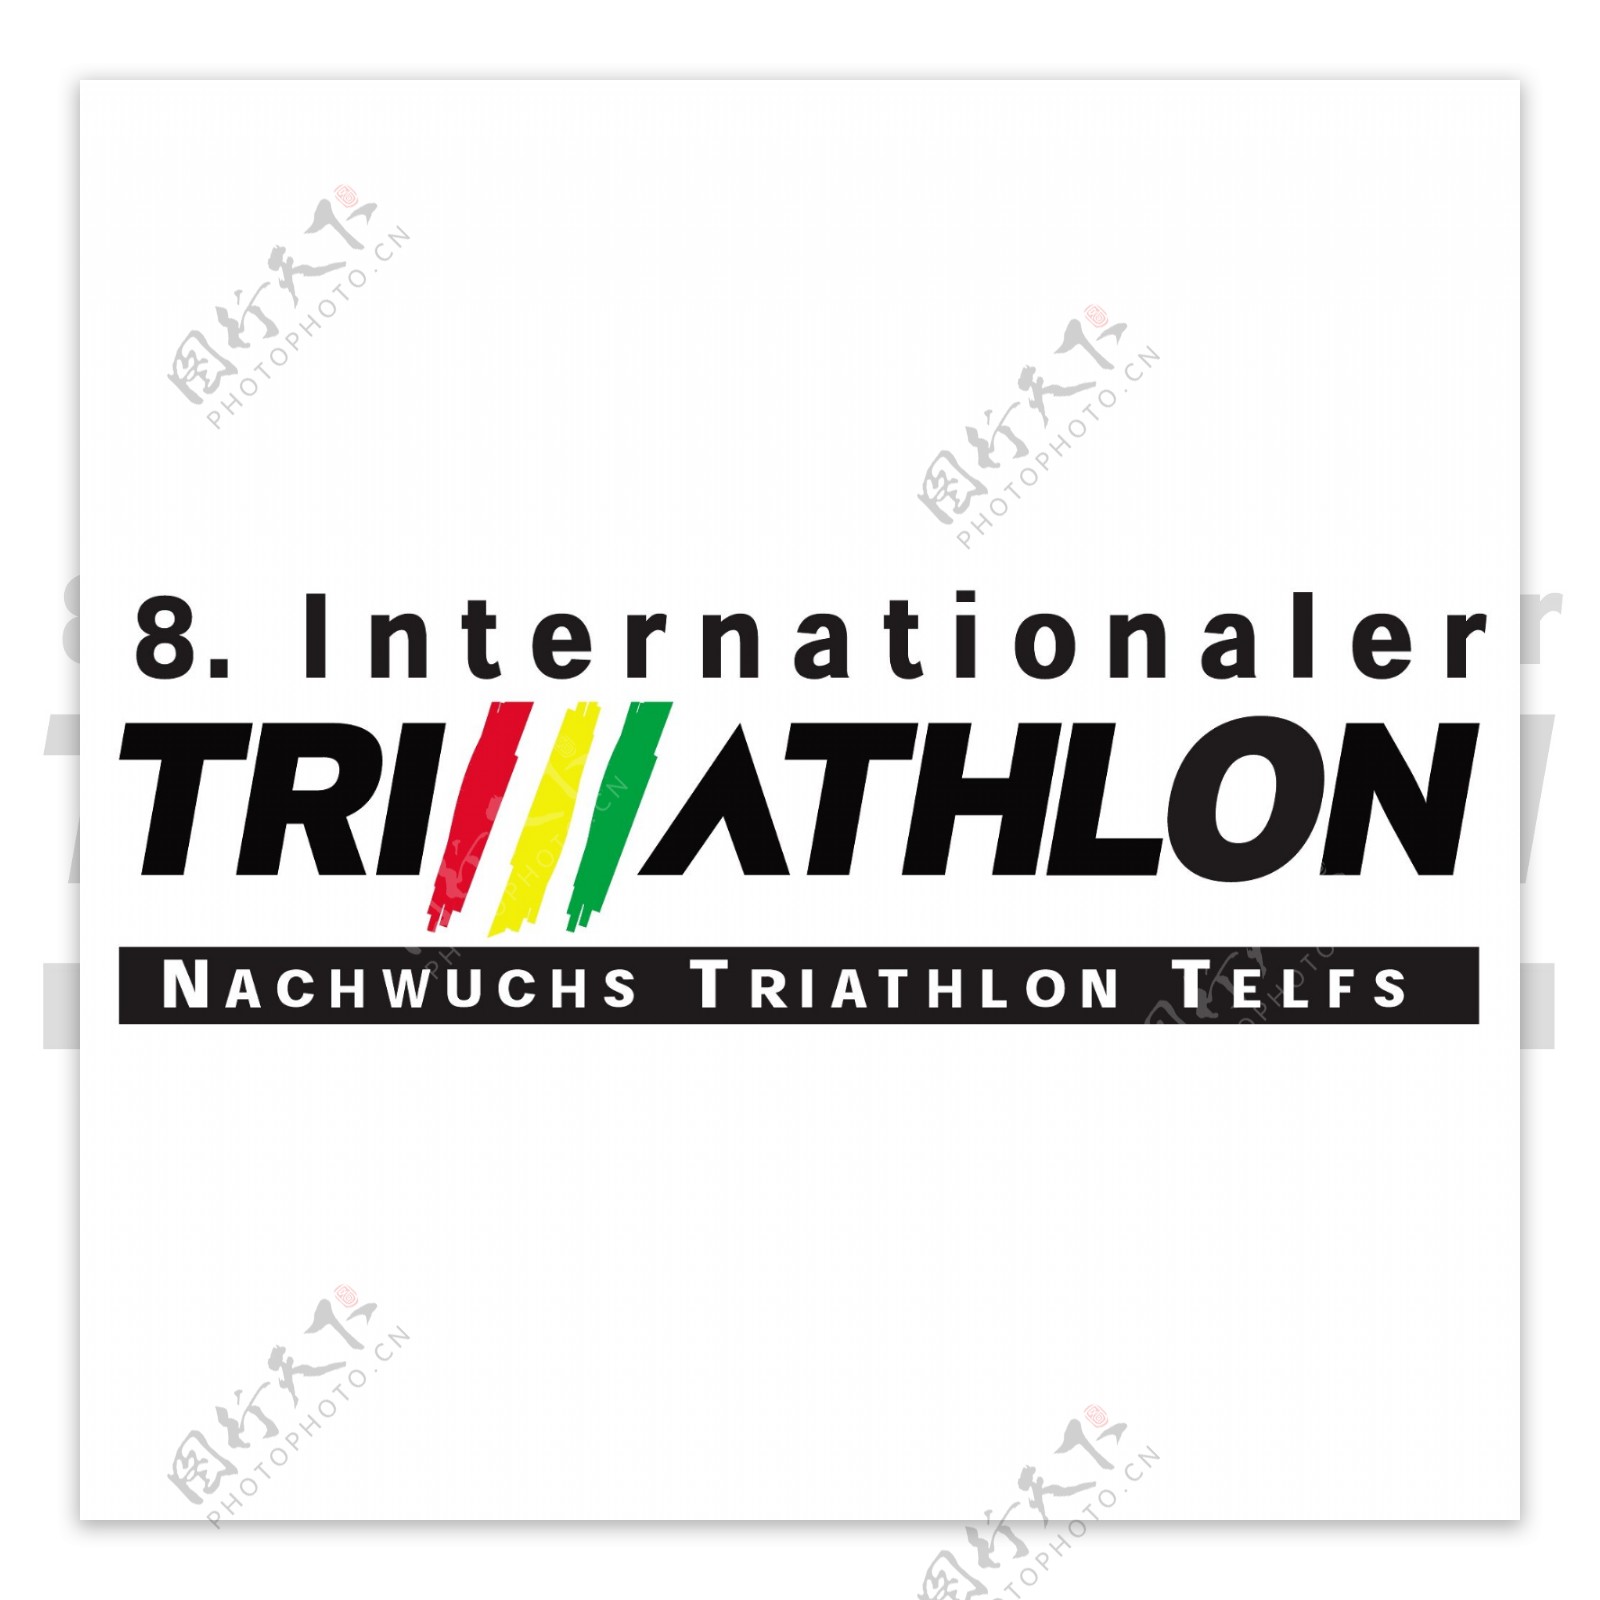 TriathlonTelfslogo设计欣赏TriathlonTelfs运动赛事LOGO下载标志设计欣赏